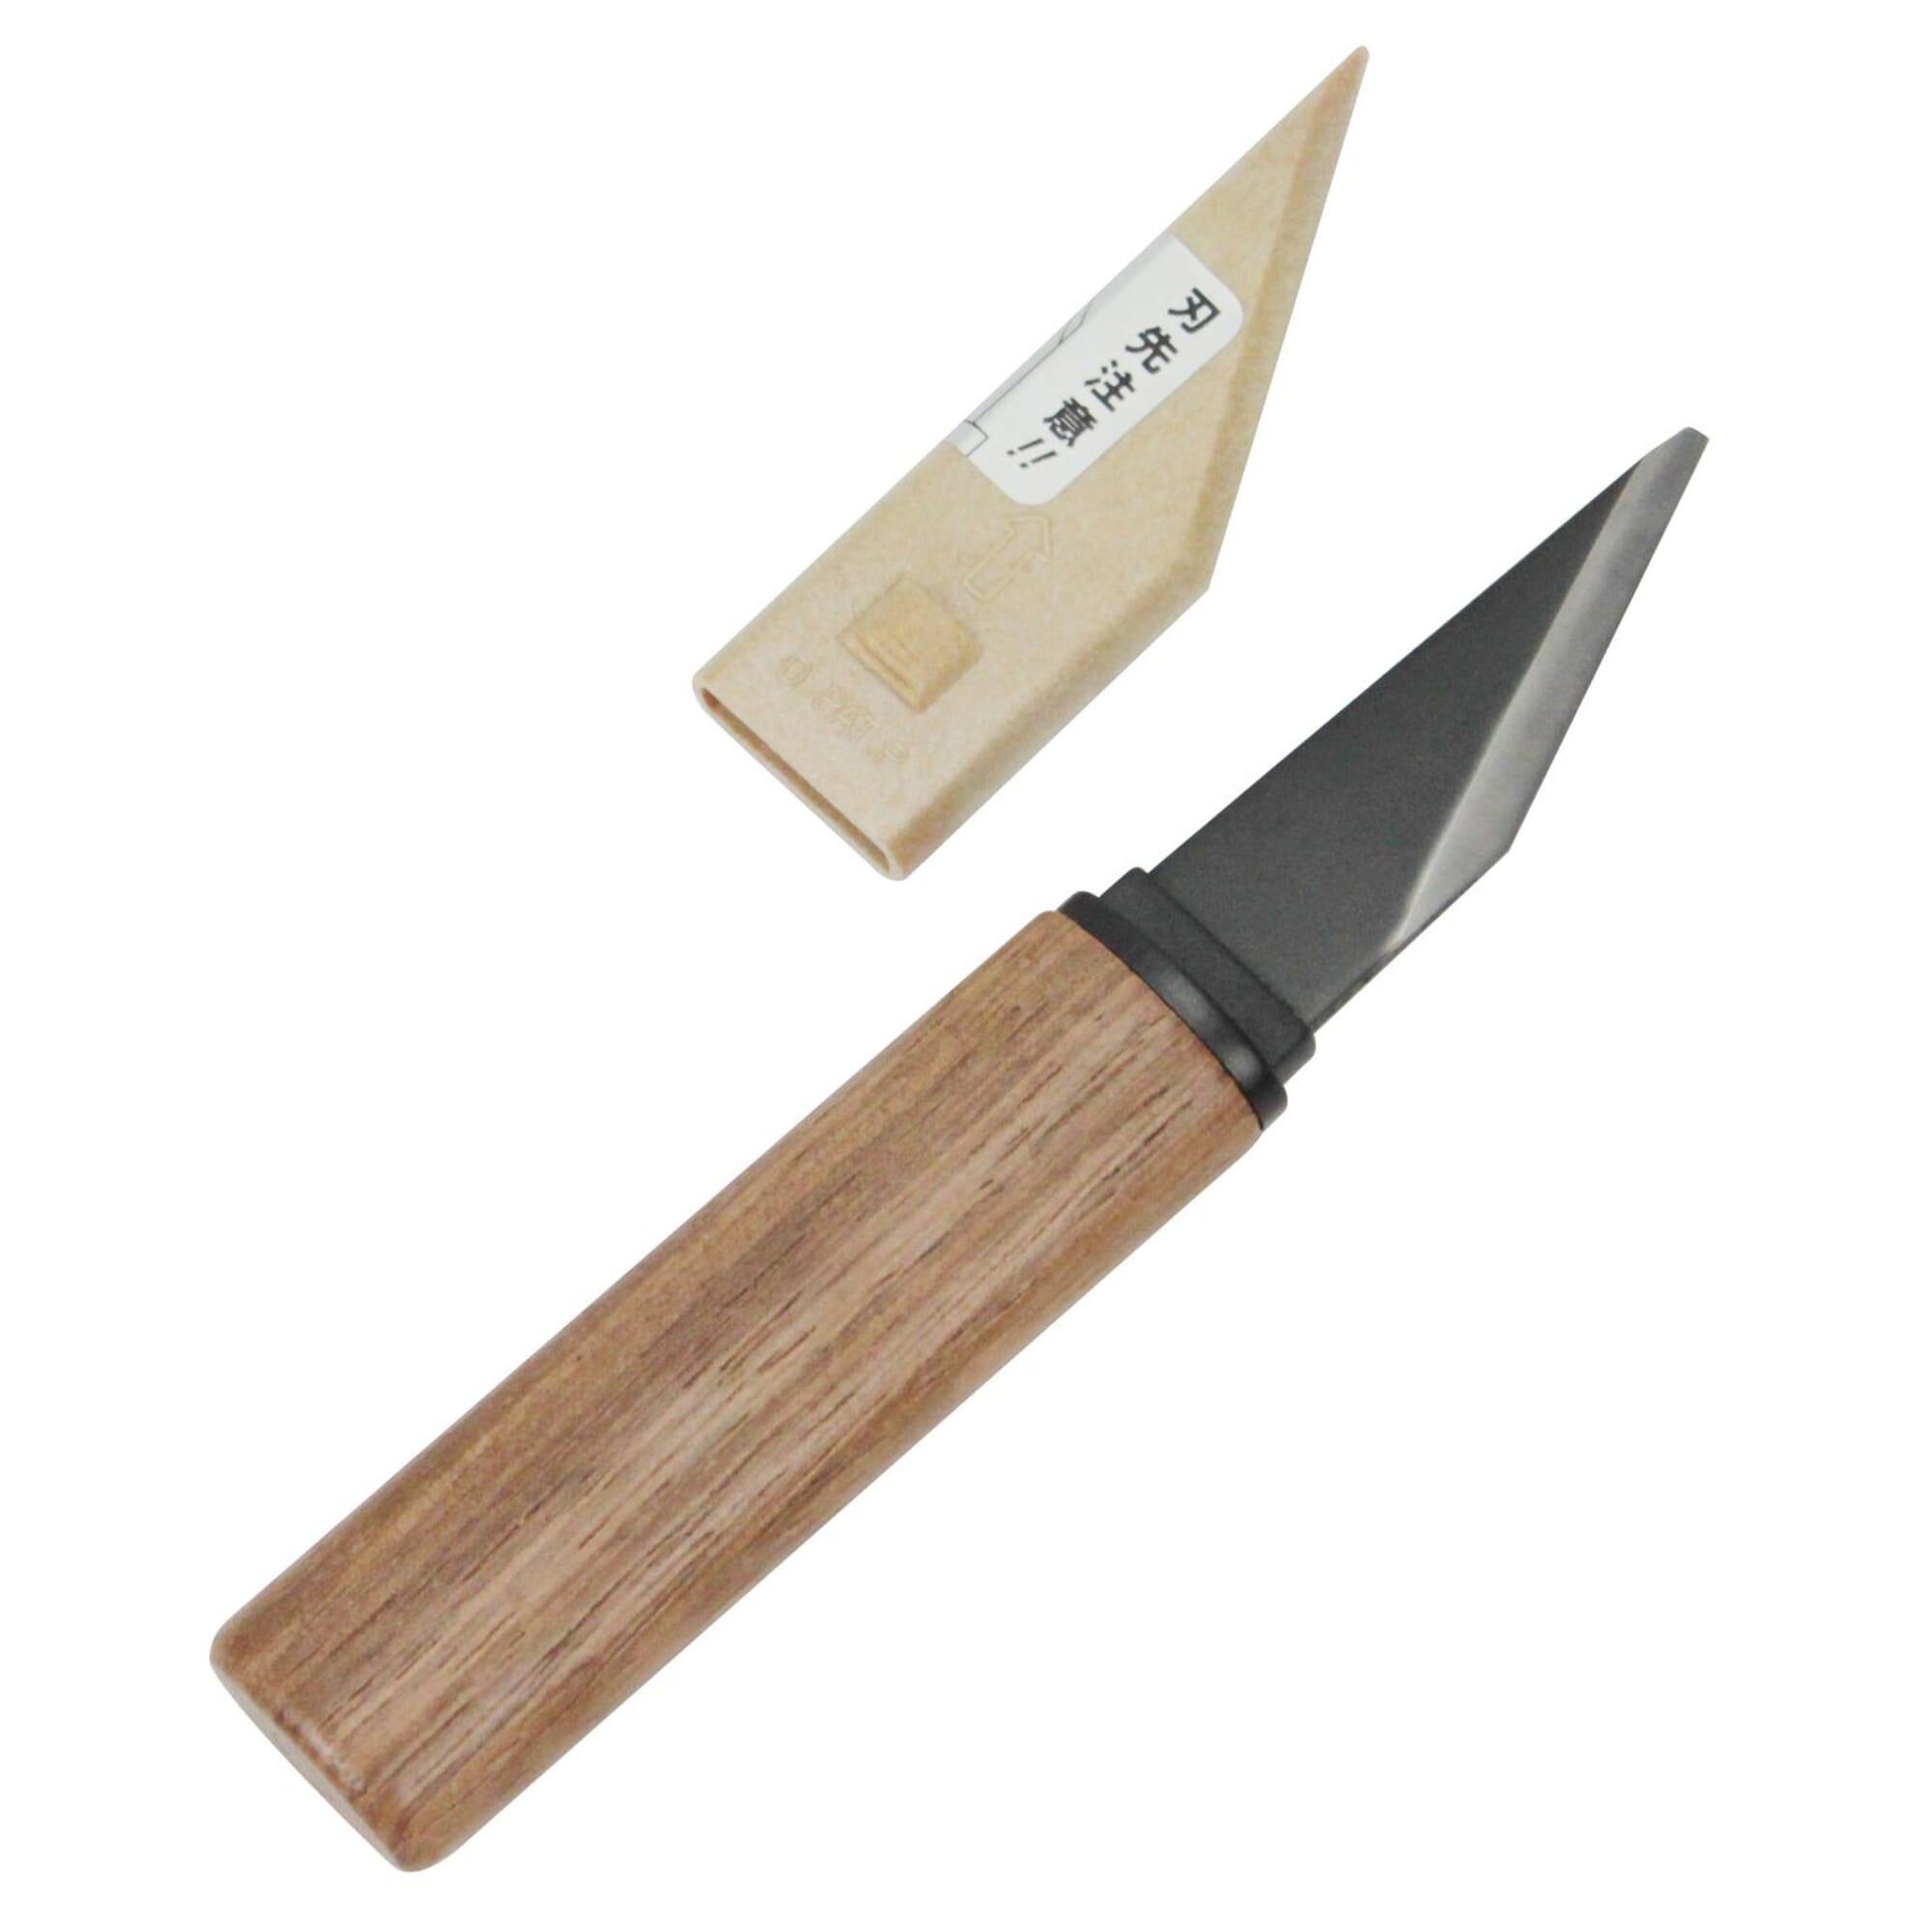 Japanese Kogatana wood carving knife set w/ roll-up bag, set of 6 -  Philadelphia Luthier Tools & Supplies, LLC